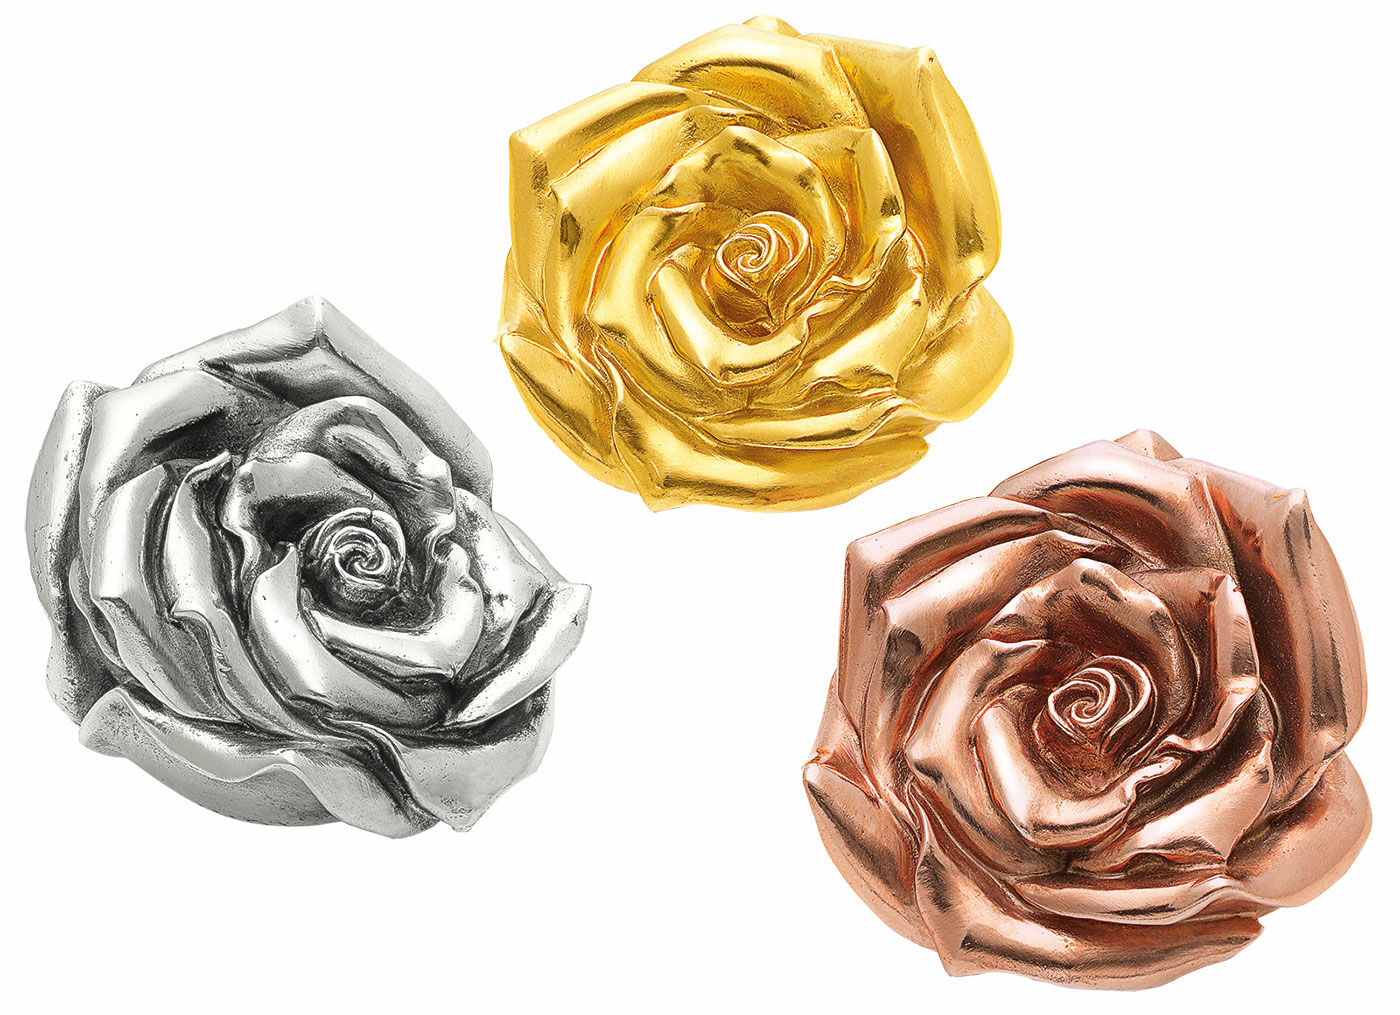 Set of 3 sculptures "Rose" (2012) by Ottmar Hörl